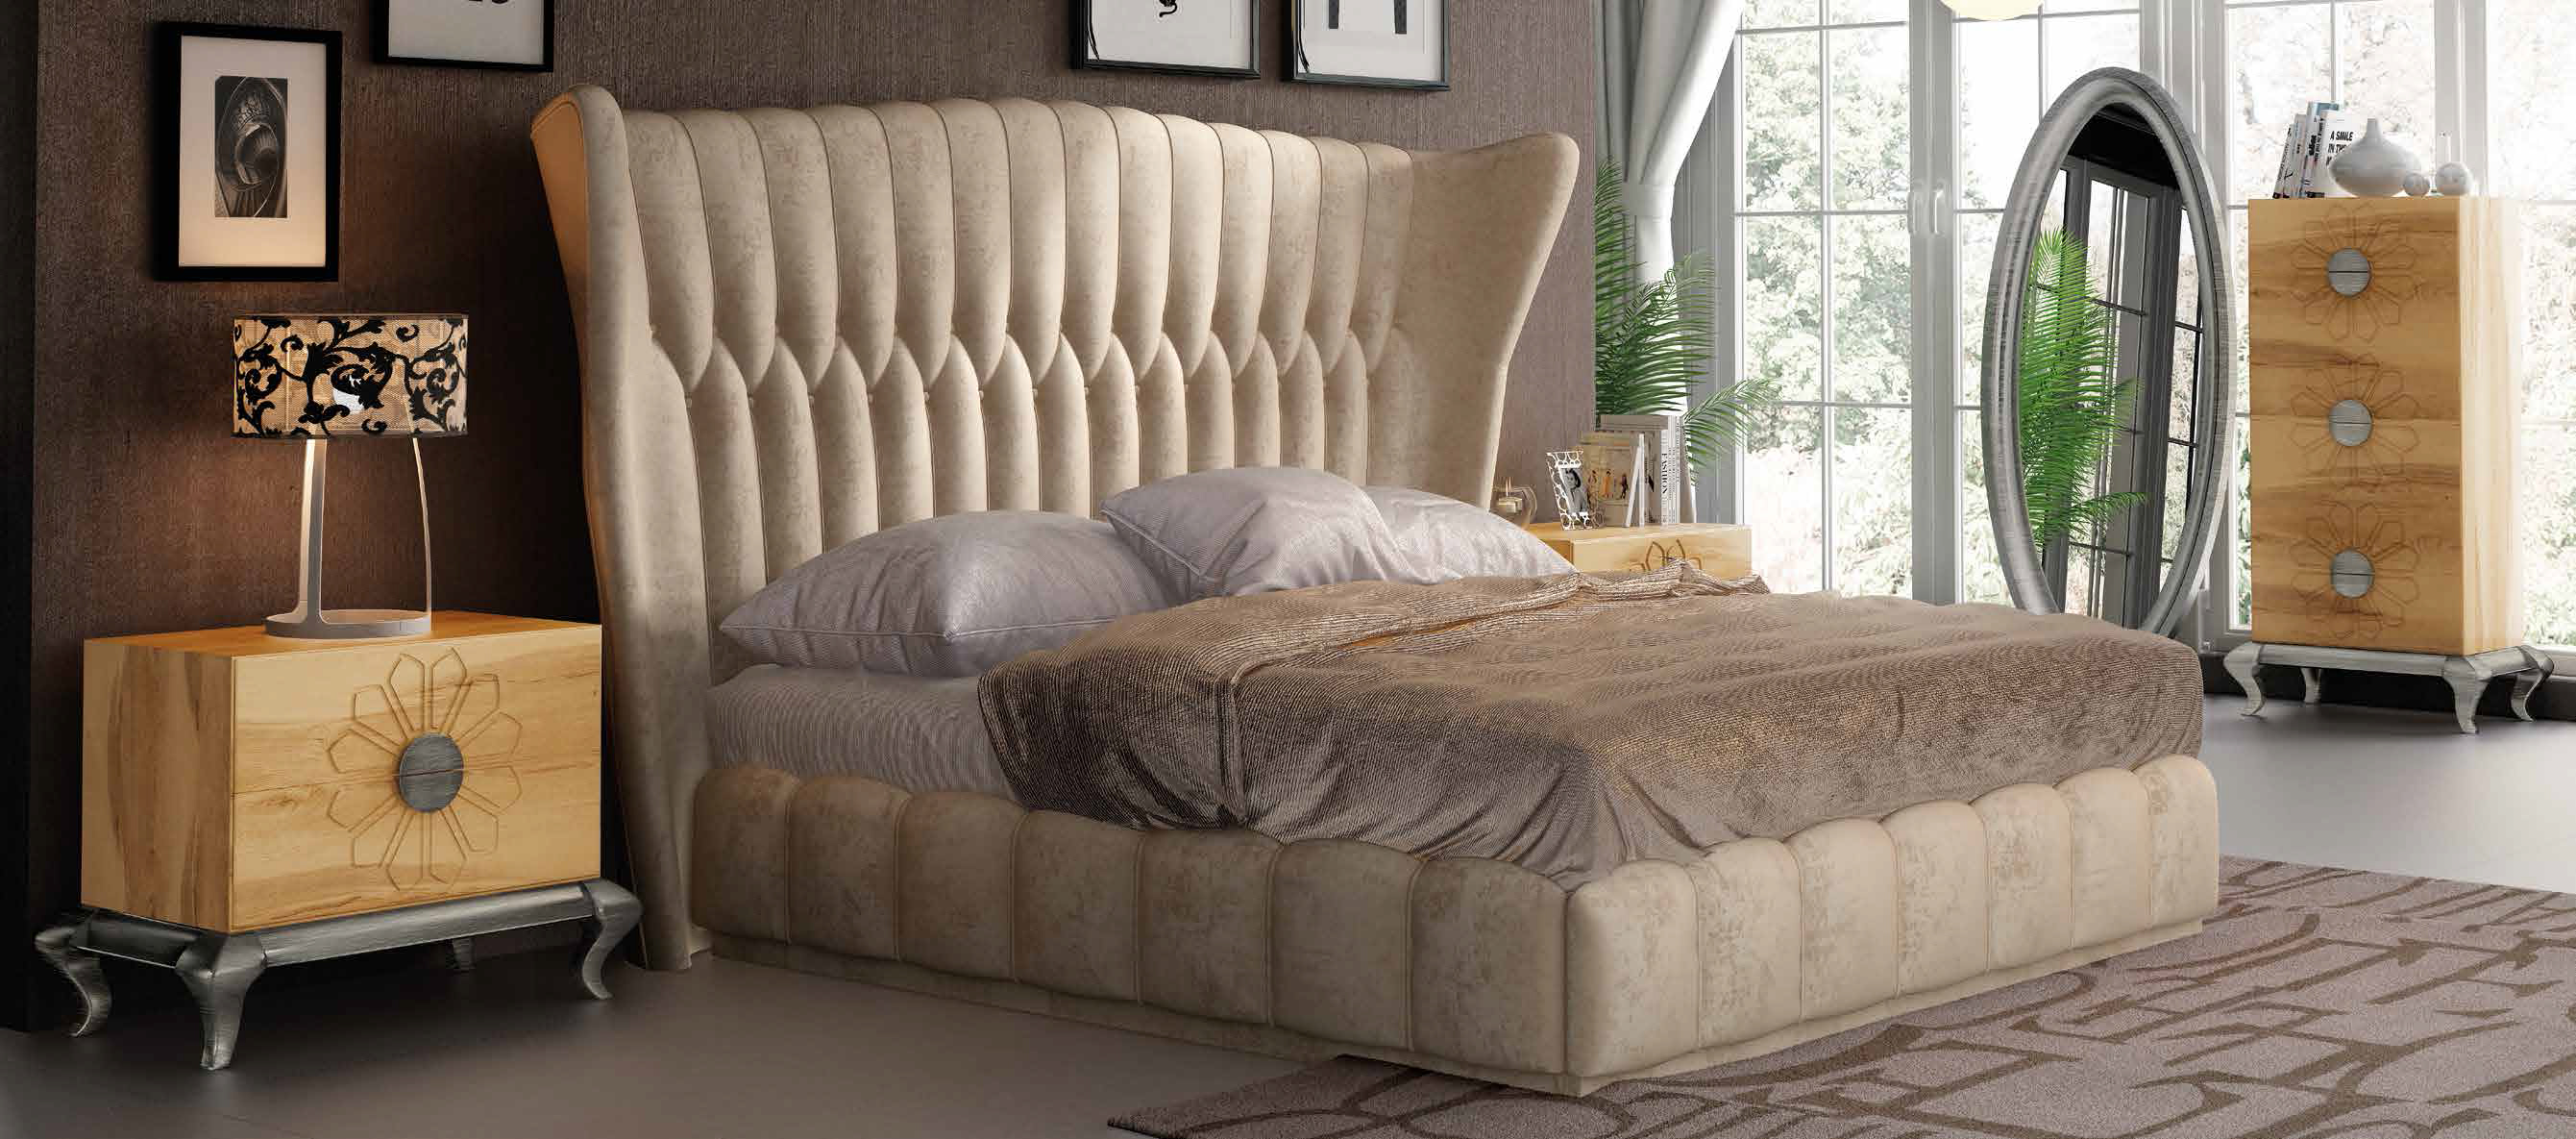 Bedroom Furniture Beds with storage DOR 61